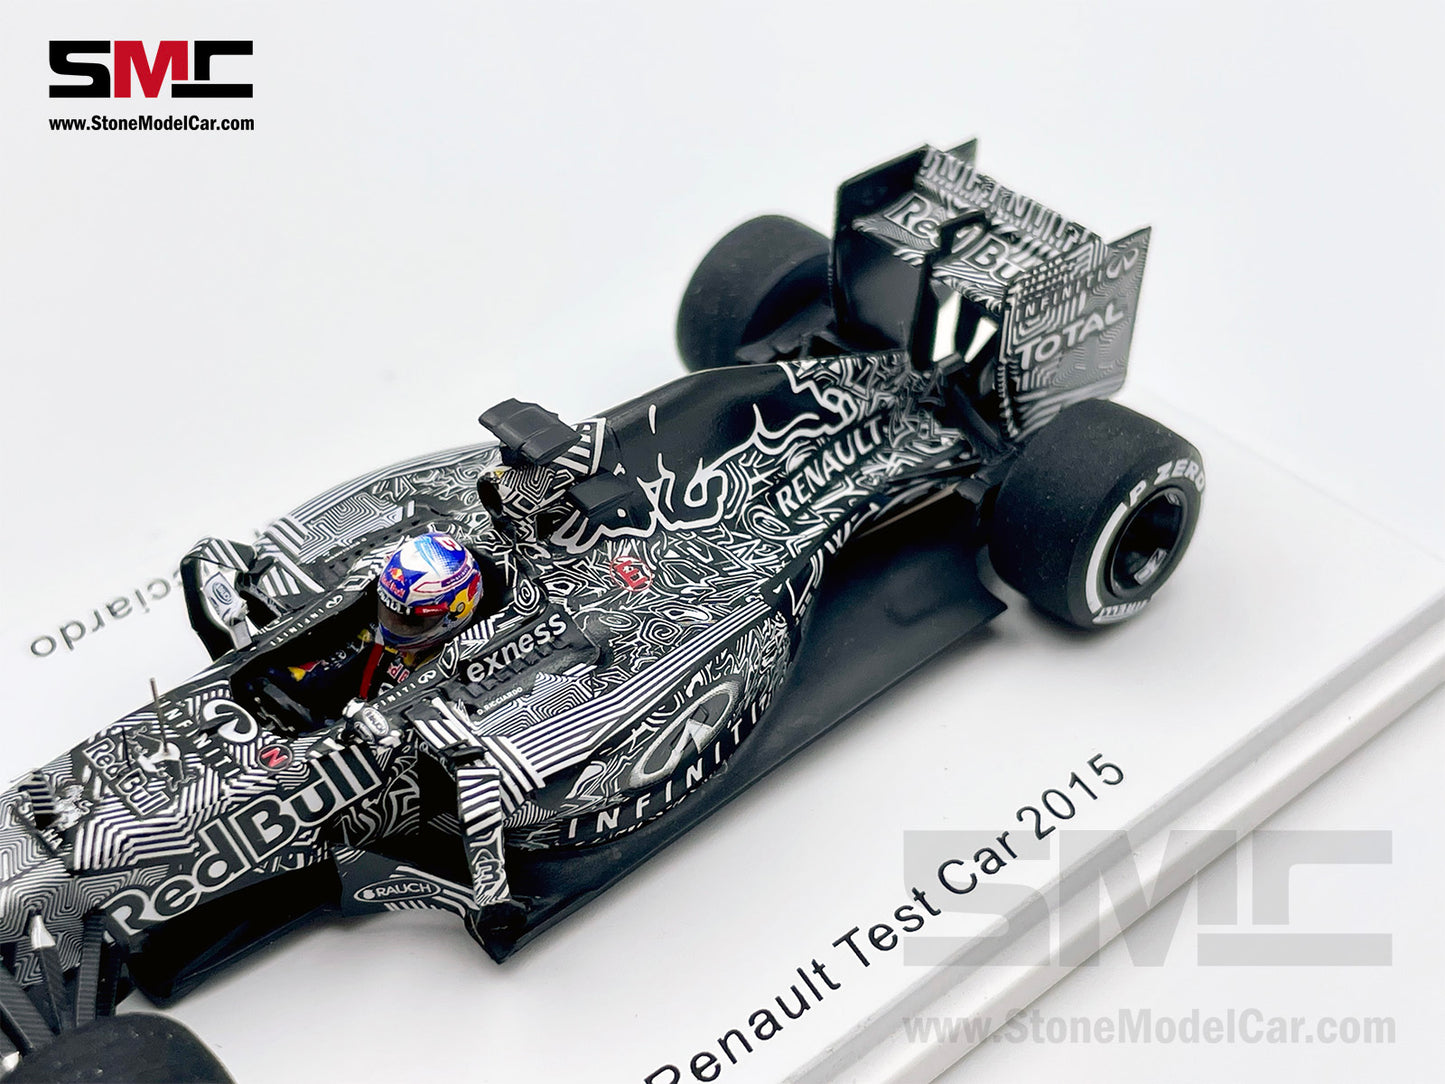 1:43 Spark Red Bull F1 RB11 #3 Daniel Ricciardo Special Testing Livery 2015